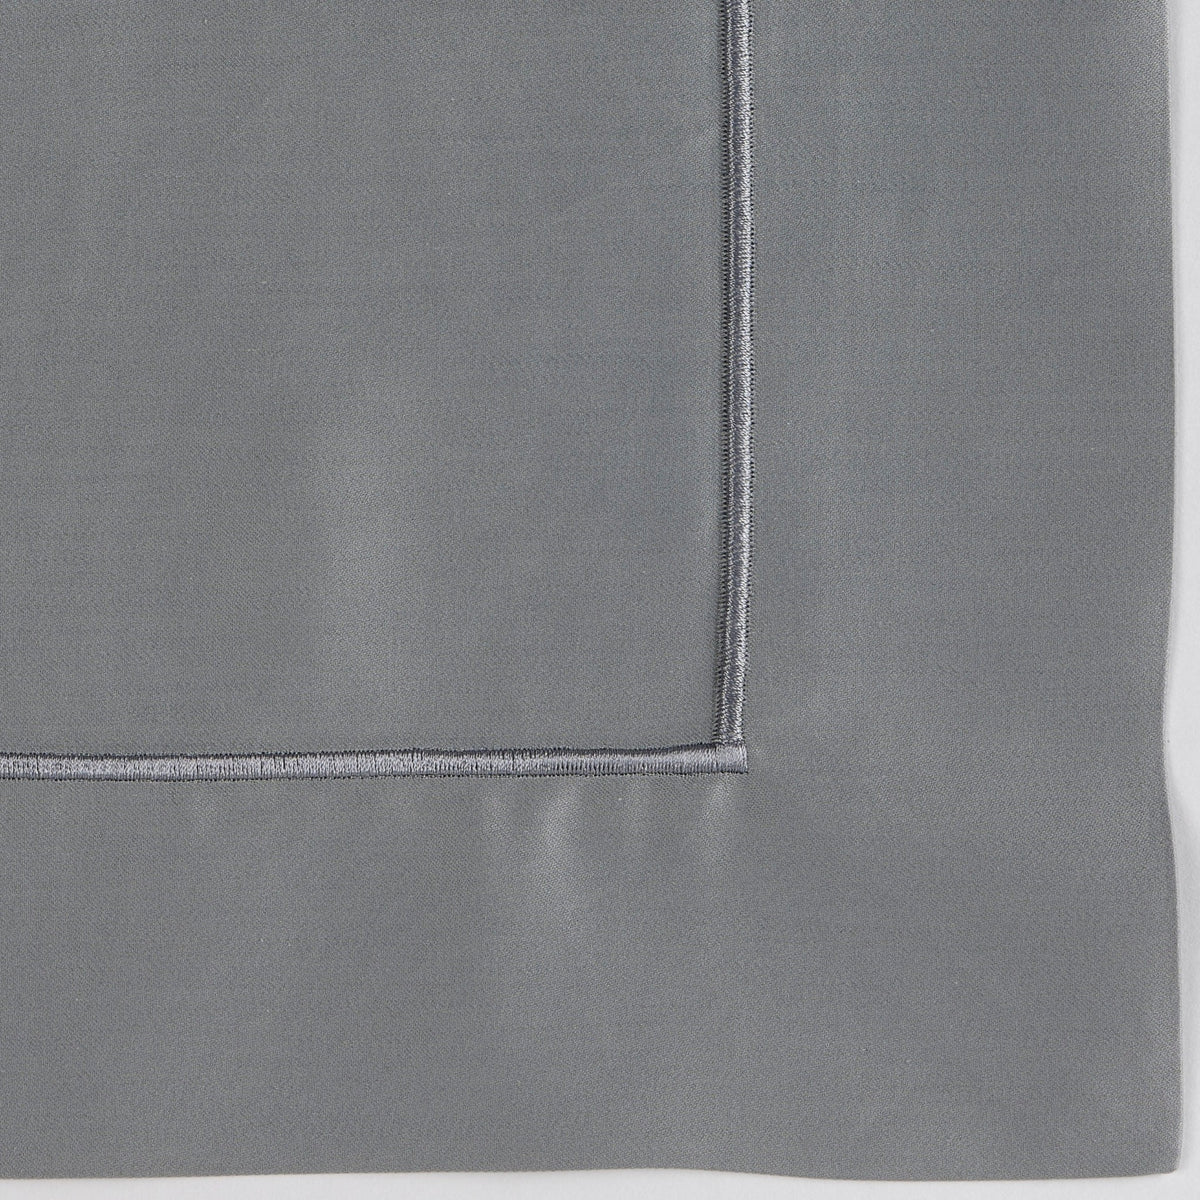 Swatch Sample of Celso de Lemos Bourdon Bedding Ardoise Color